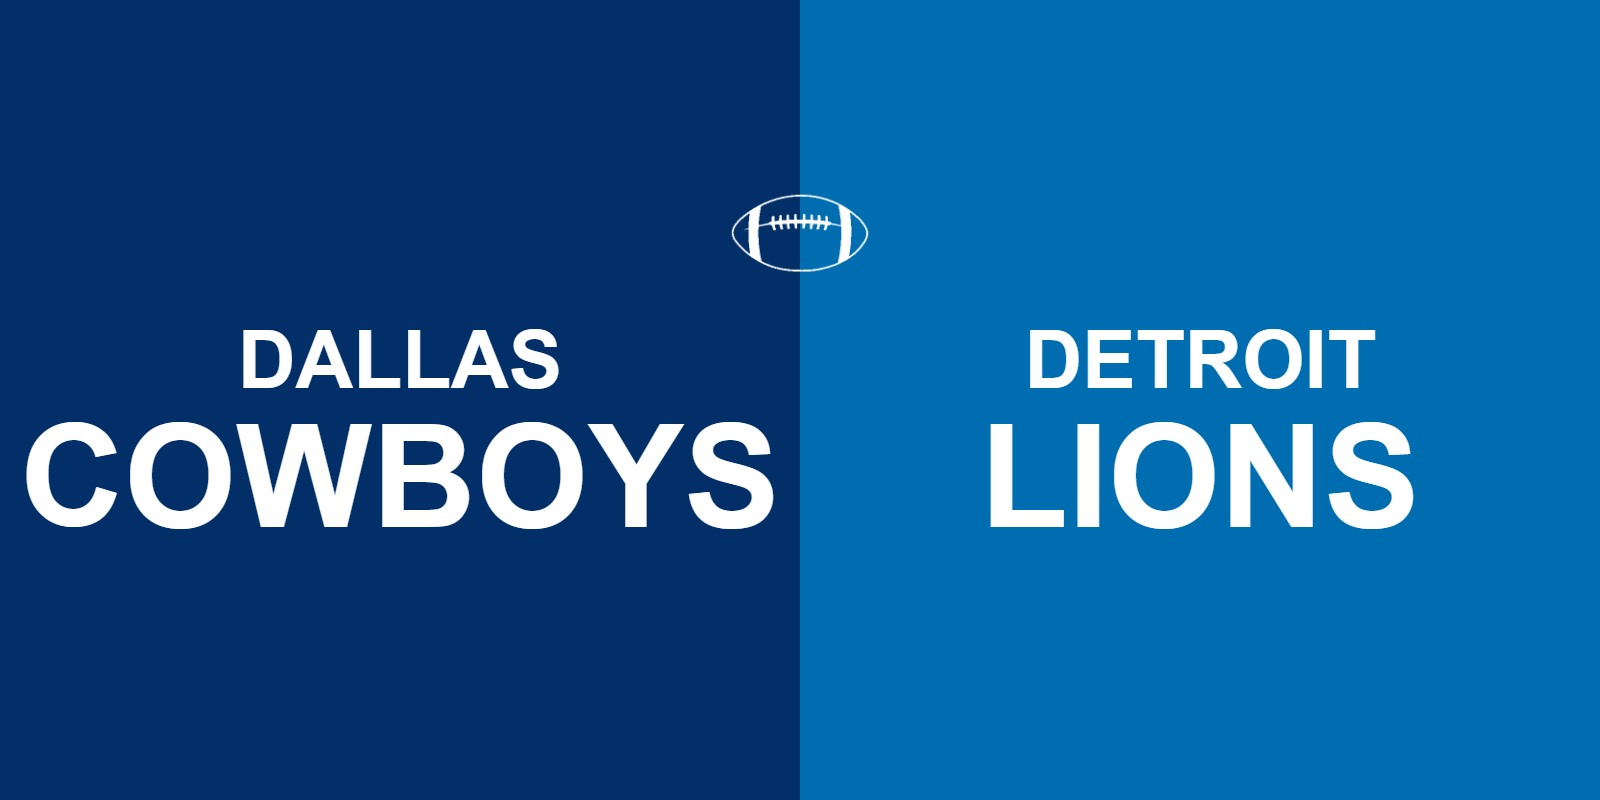 Cowboys vs Lions